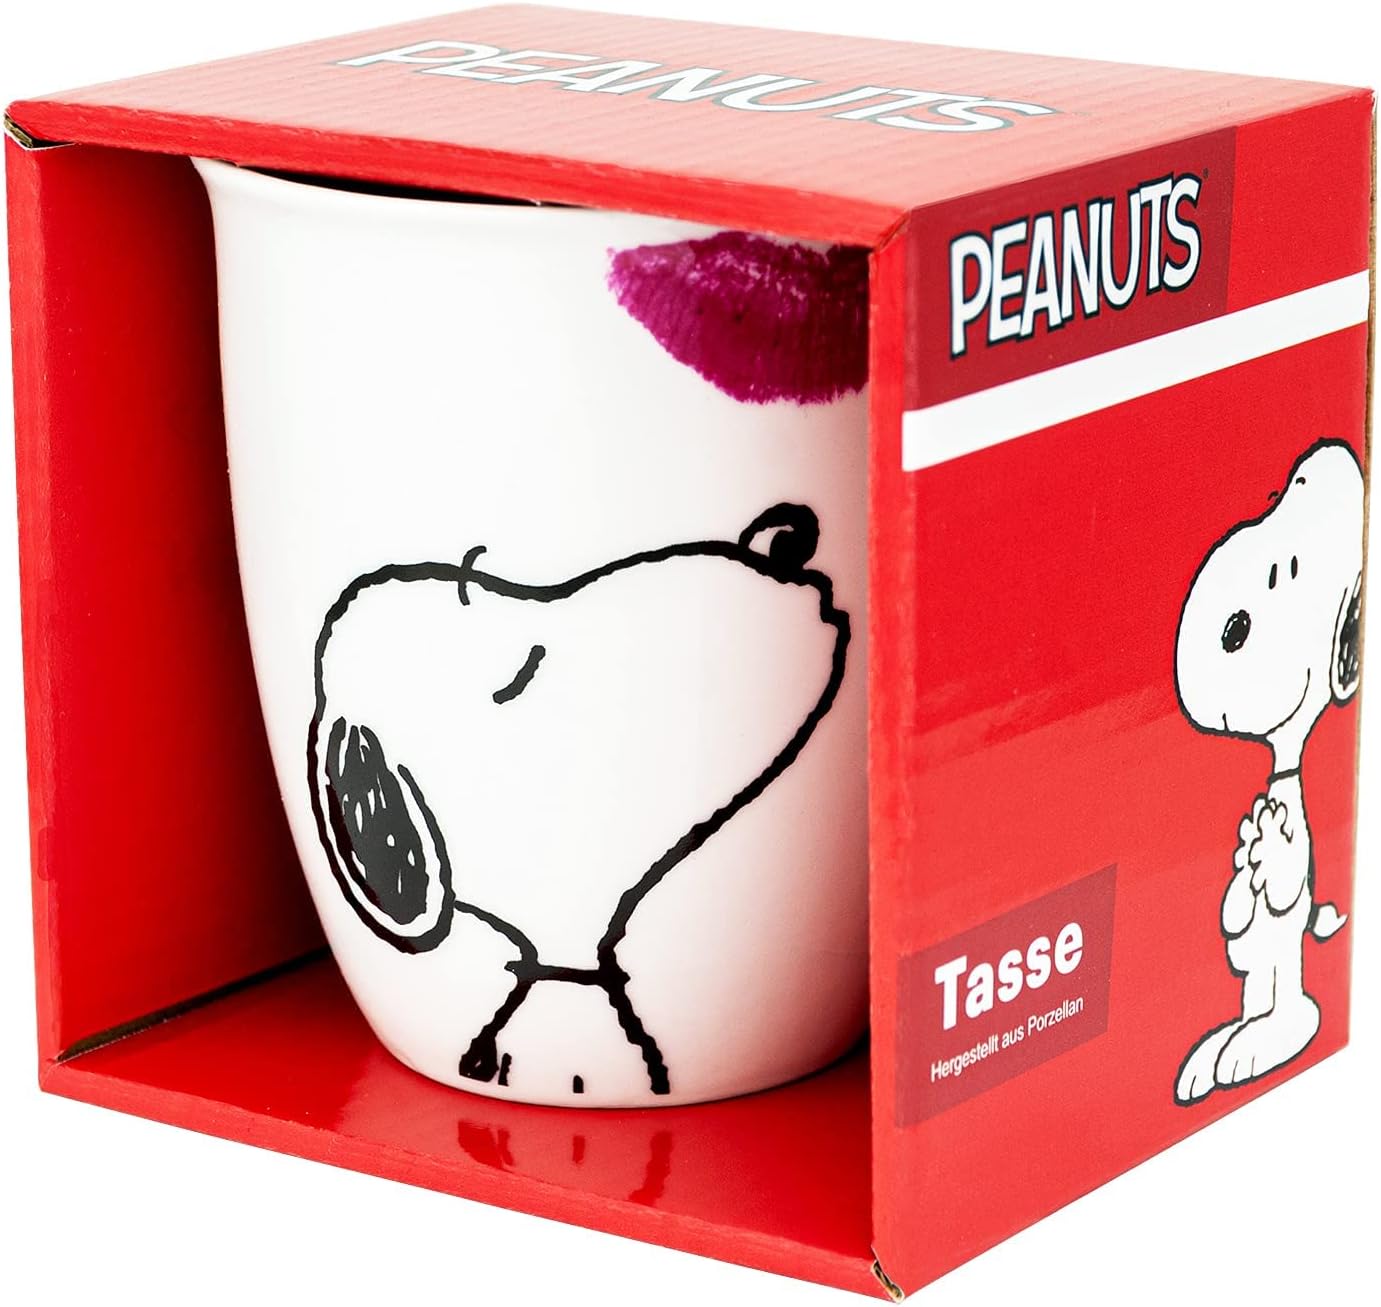 The Peanuts Snoopy Tasse - Ein Kuss am Morgen... - Kaffee Tee - Neuware